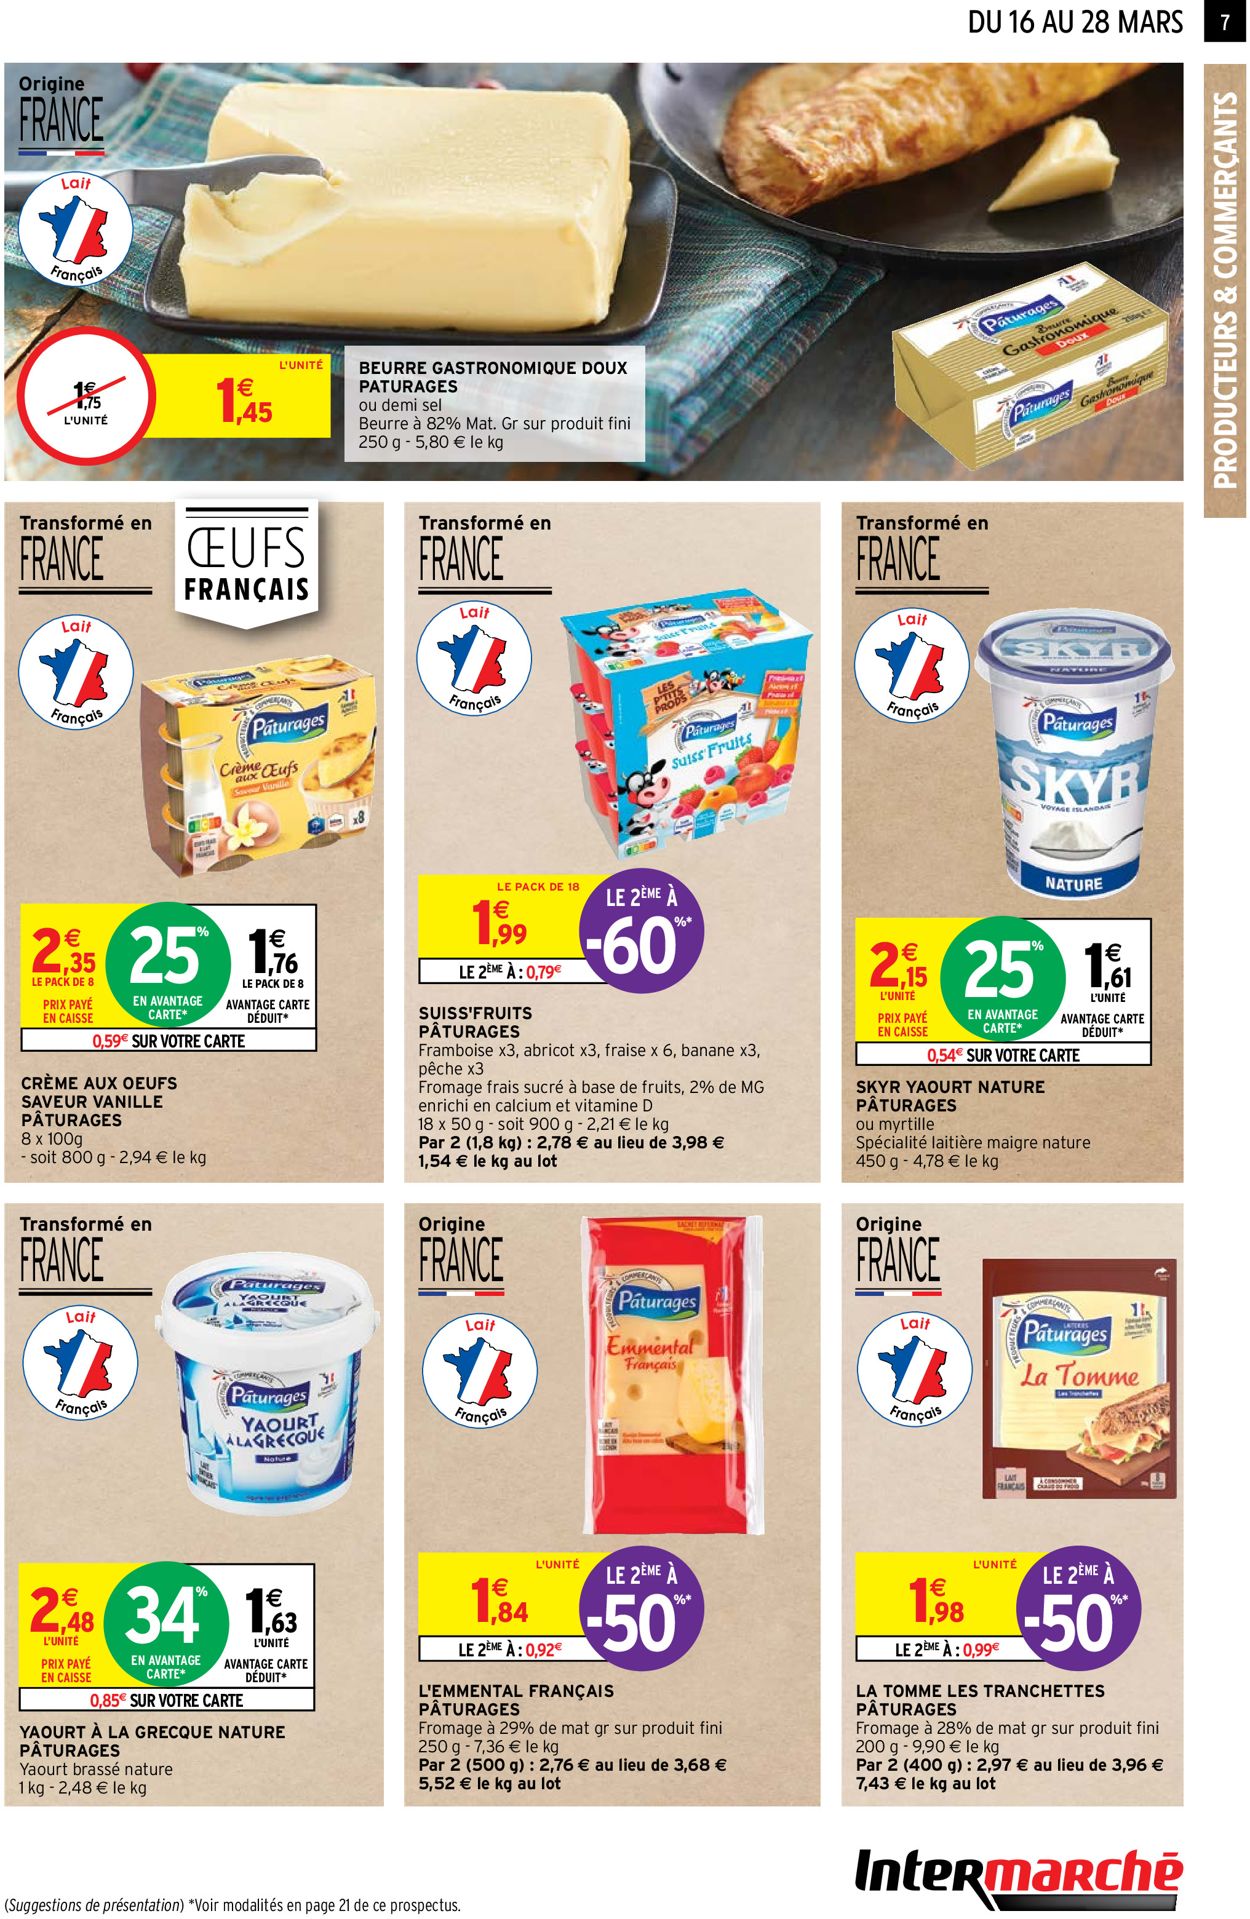 Intermarché Catalogue - 16.03-28.03.2021 (Page 7)